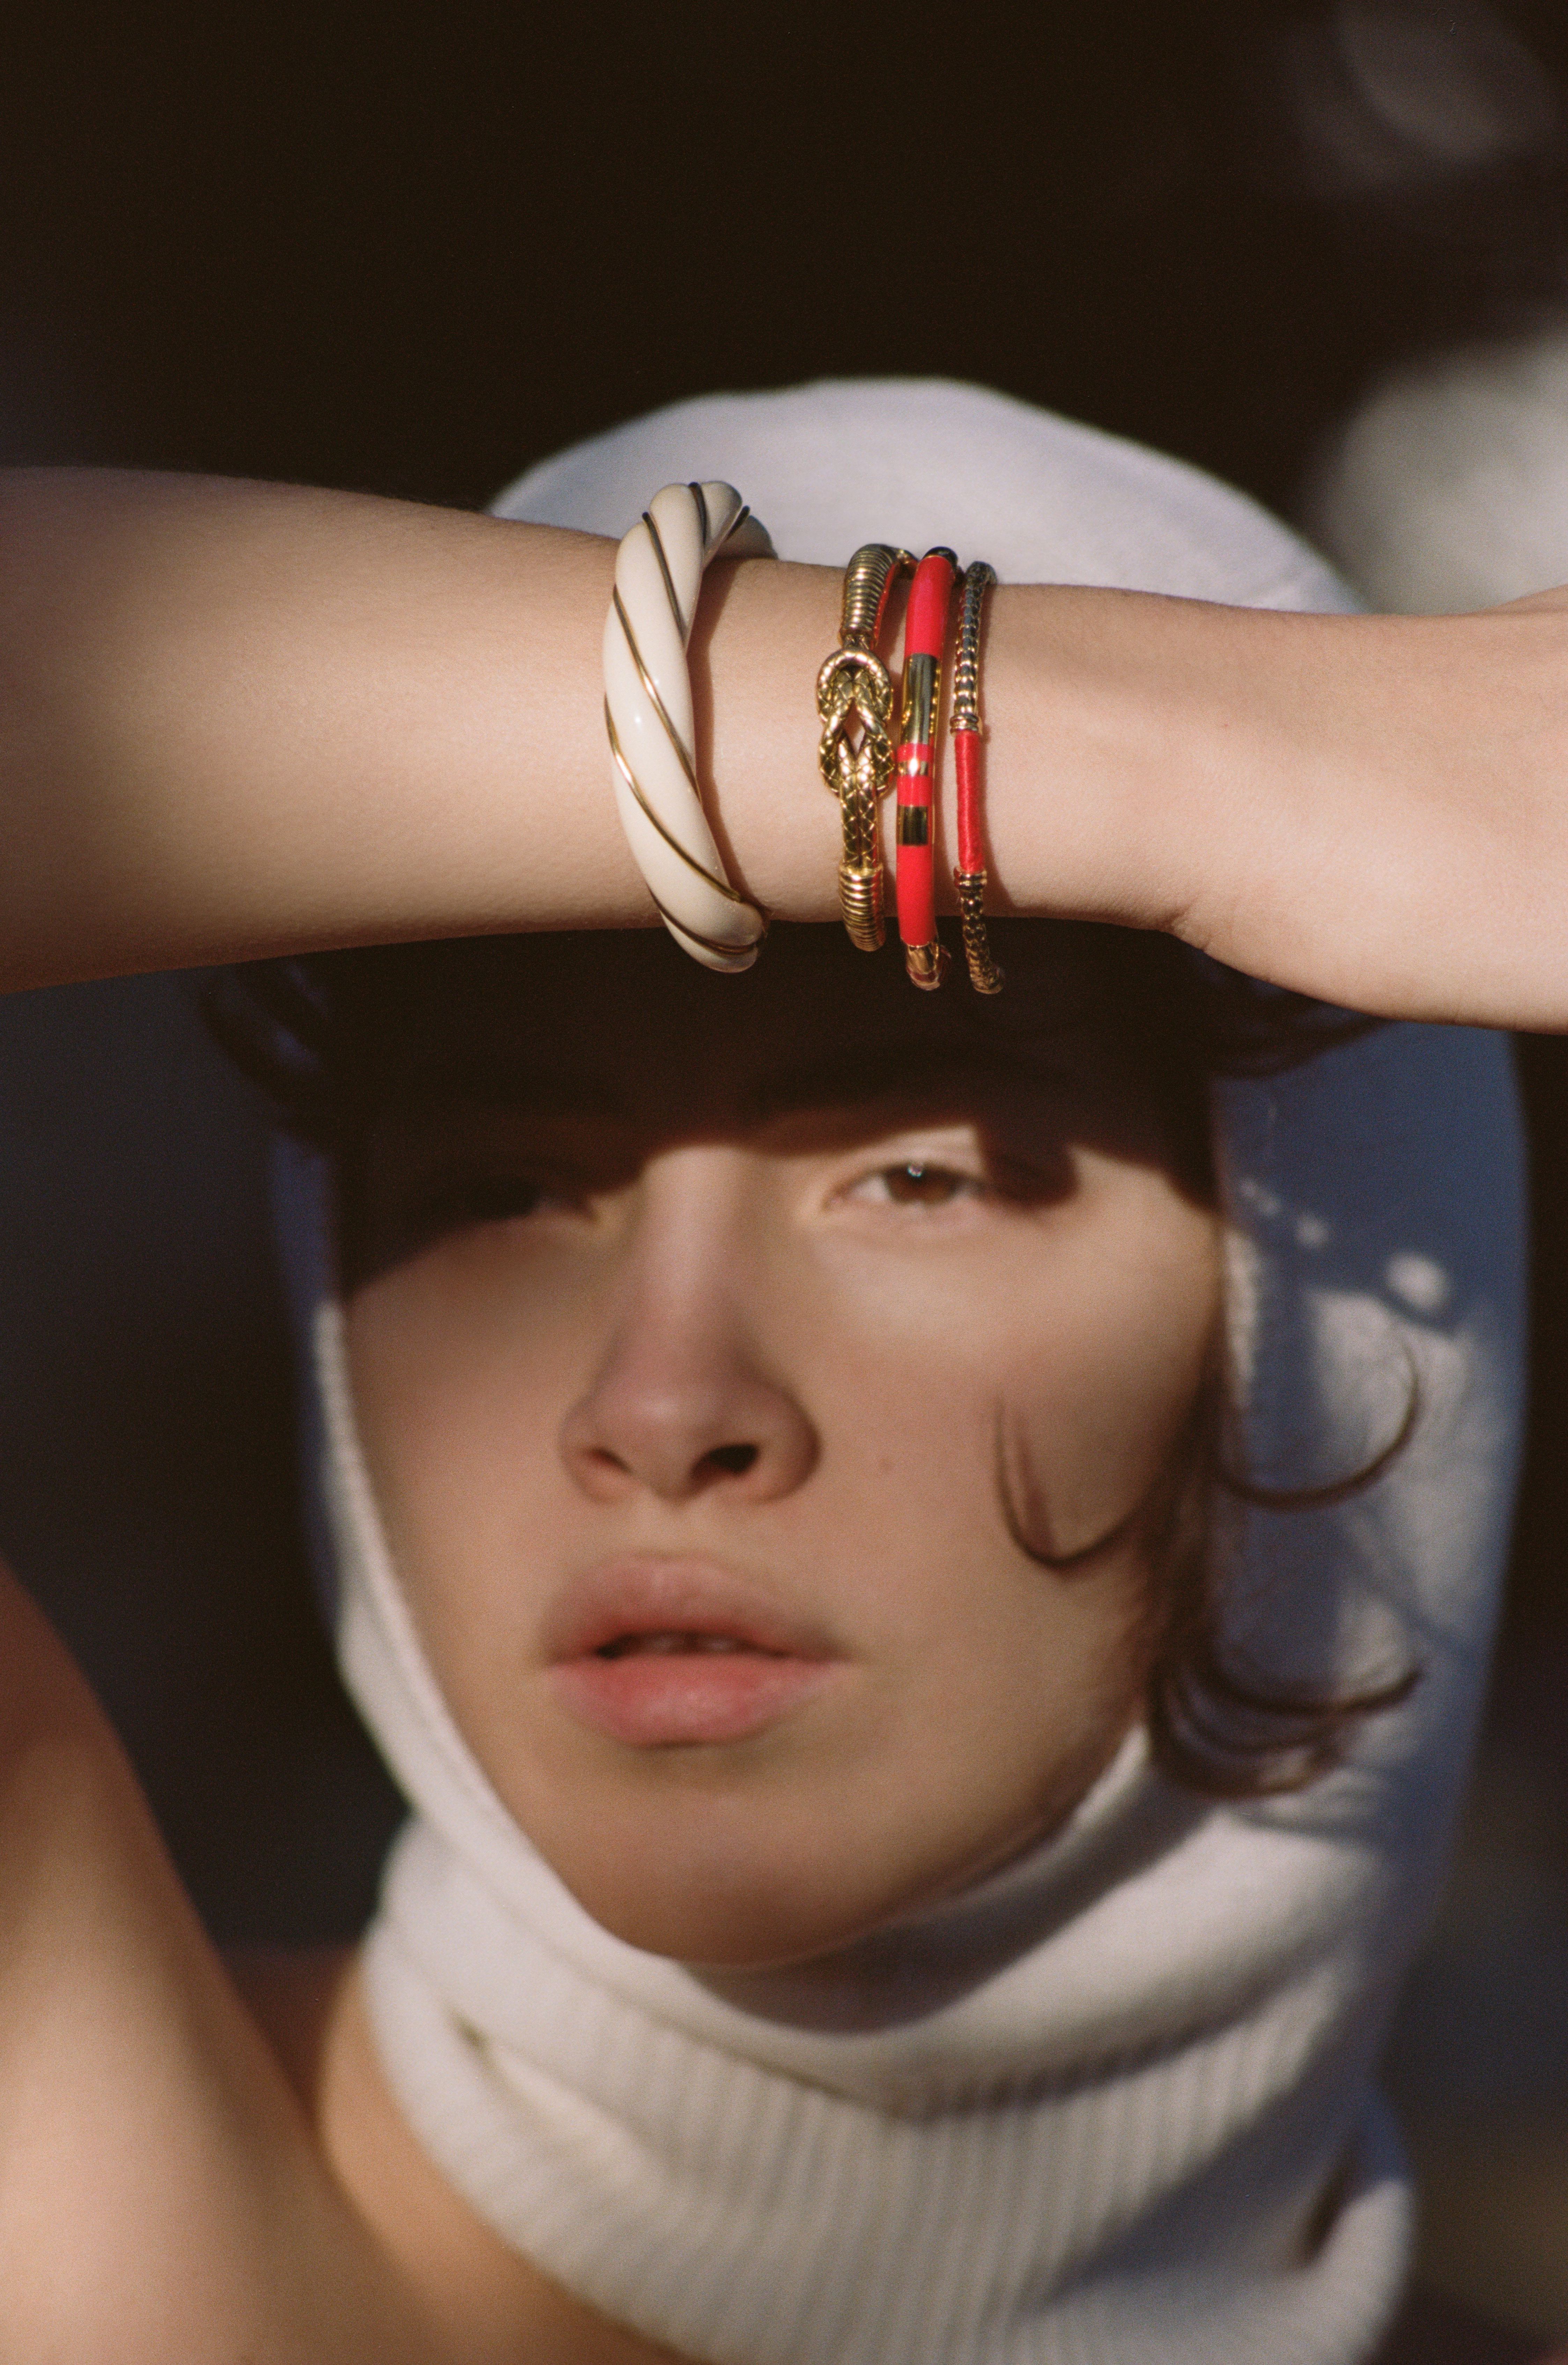 Diana resin and gold plated twisted bangle bracelet - Aurélie Bidermann